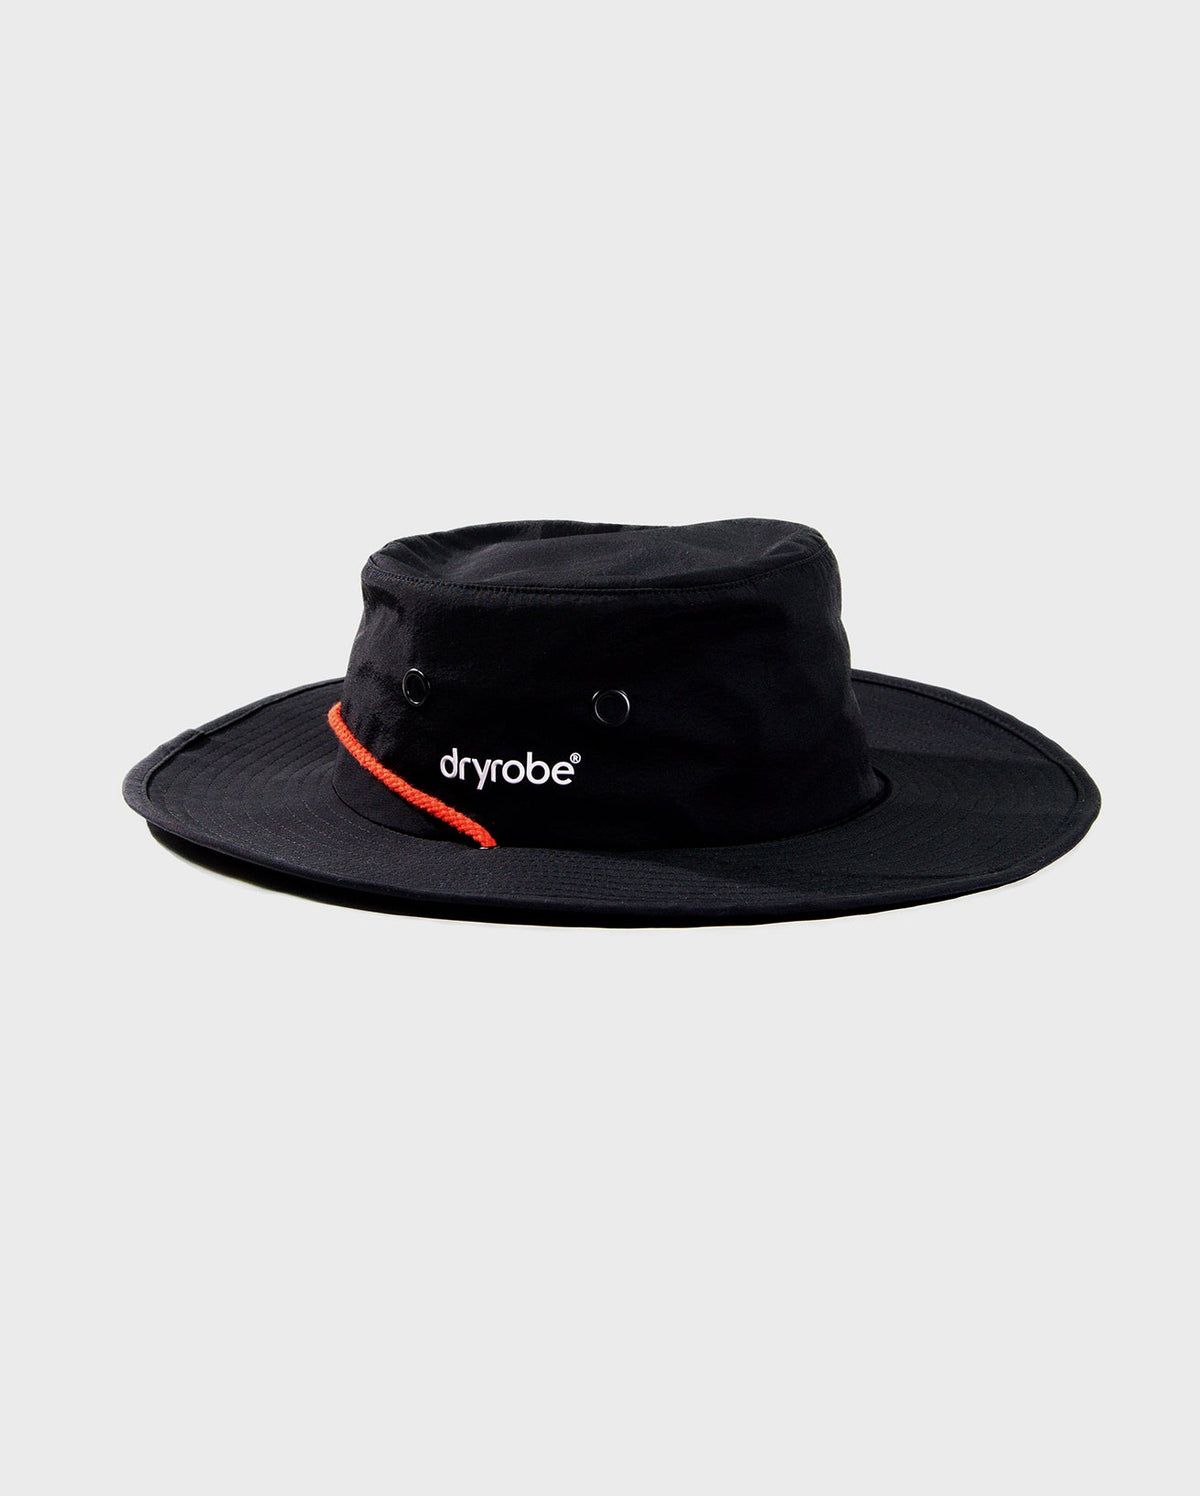 1|Black dryrobe® Quick Dry brimmed hat